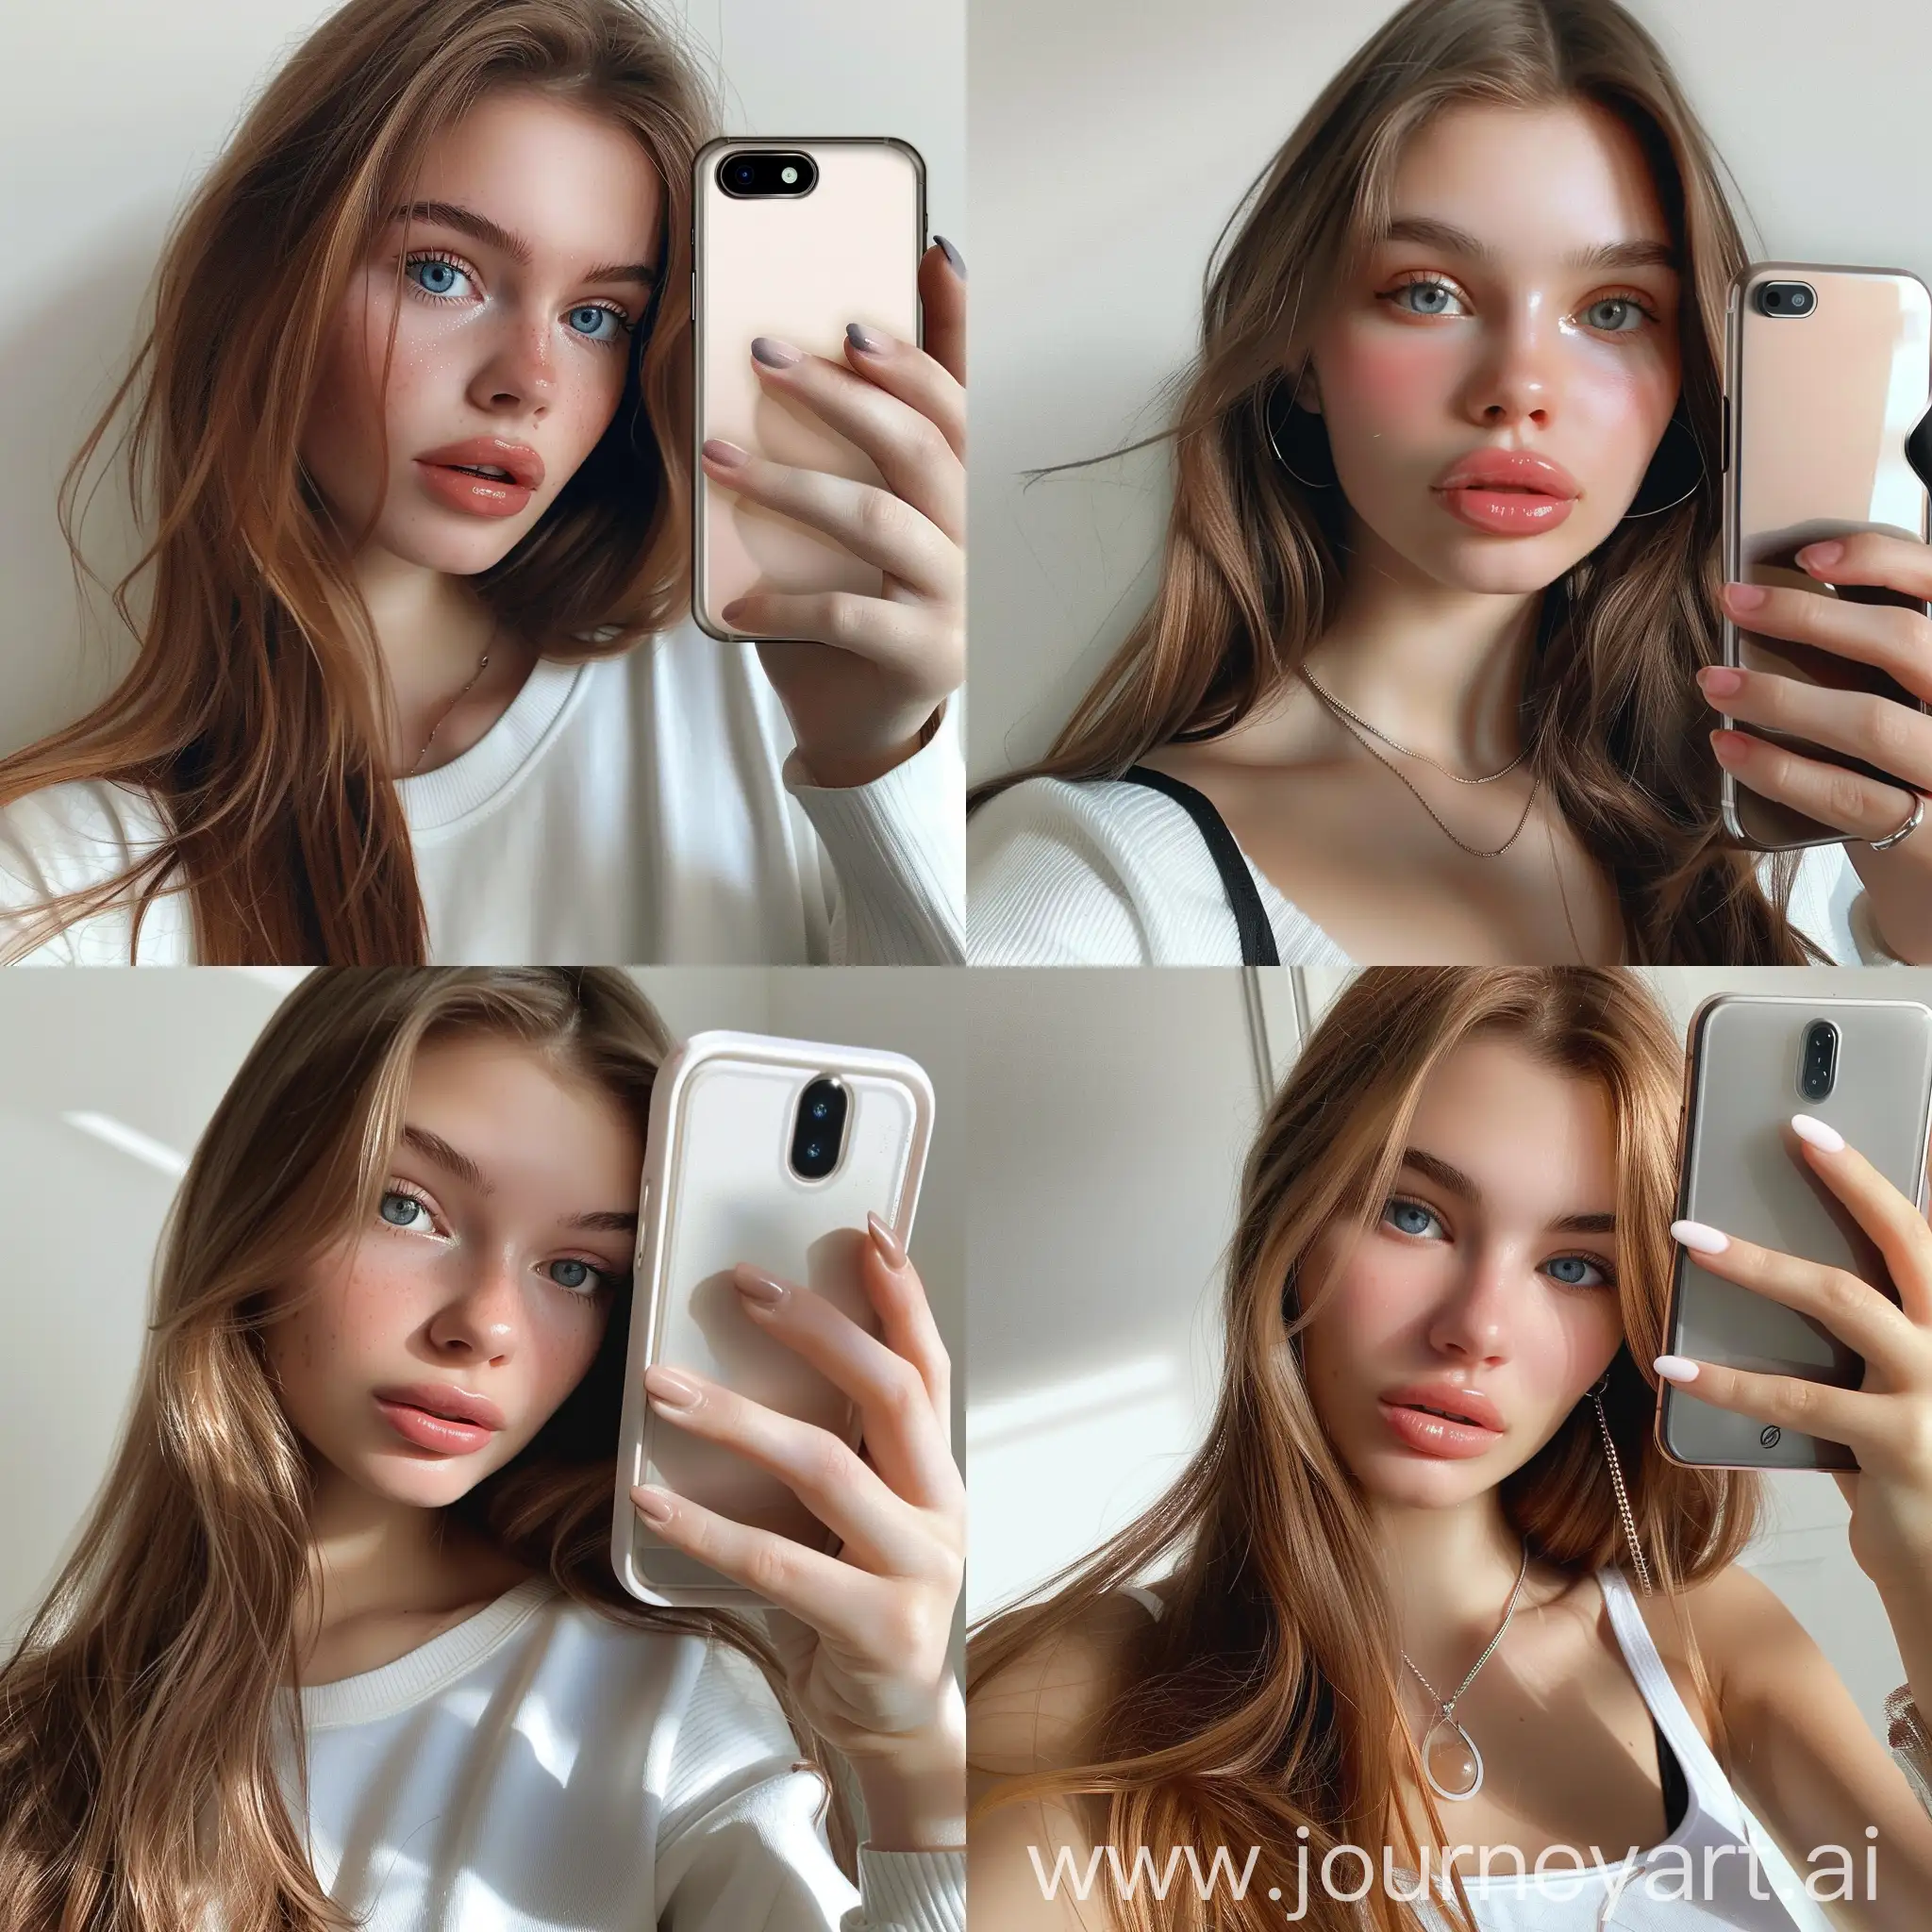 Aesthetic instagram selfie of a teenage influencer, taken from phone camera, super model